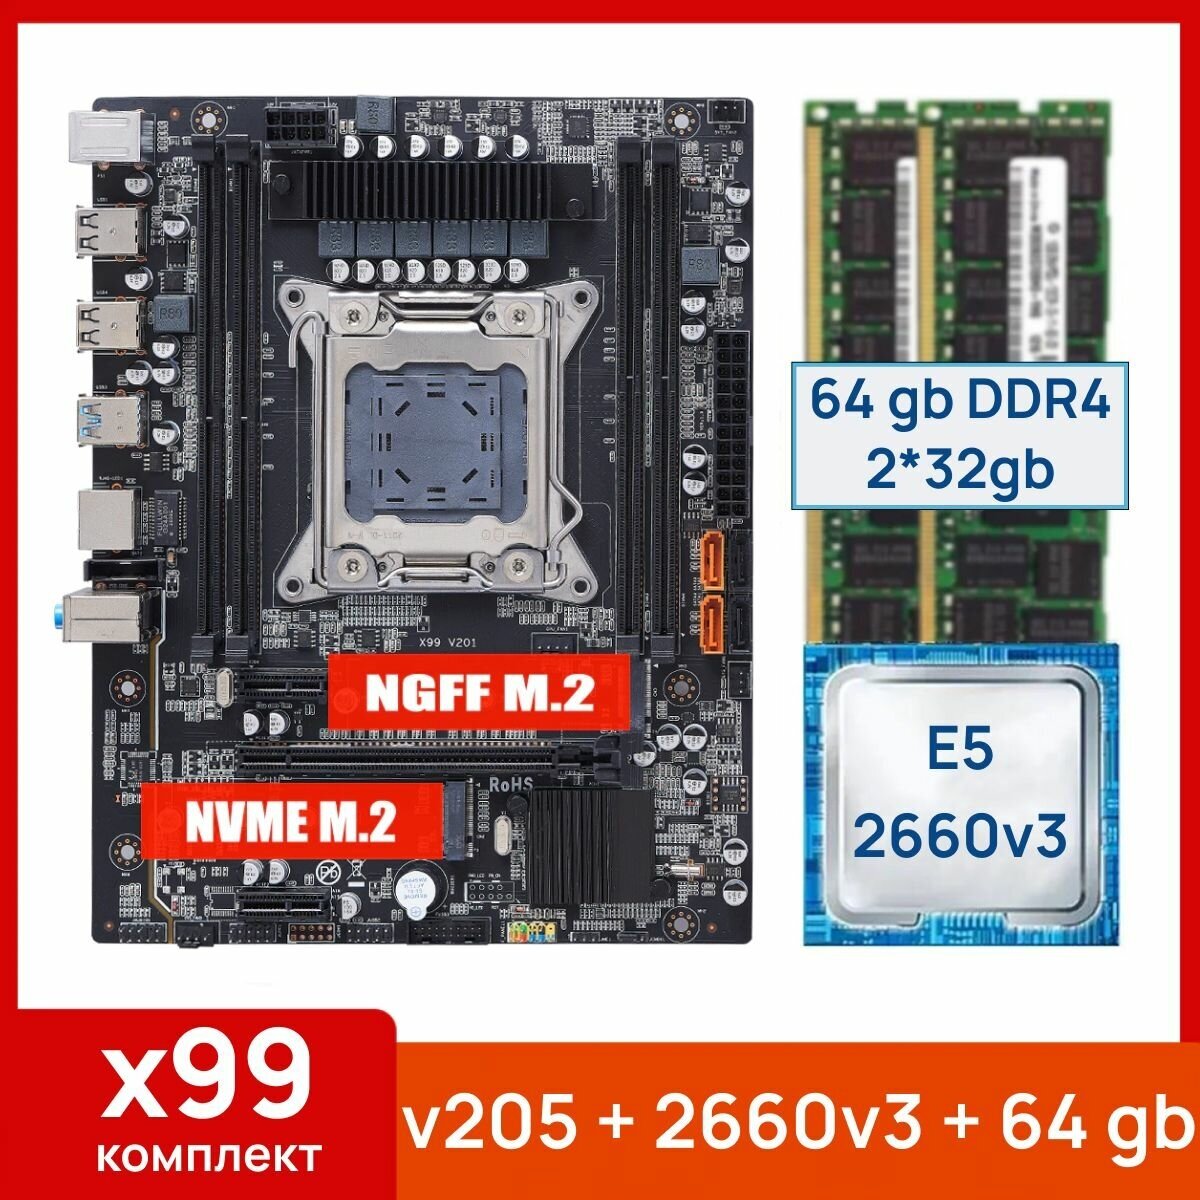 Комплект: Atermiter x99 v205 + Xeon E5 2660v3 + 64 gb(2x32gb) DDR4 ecc reg